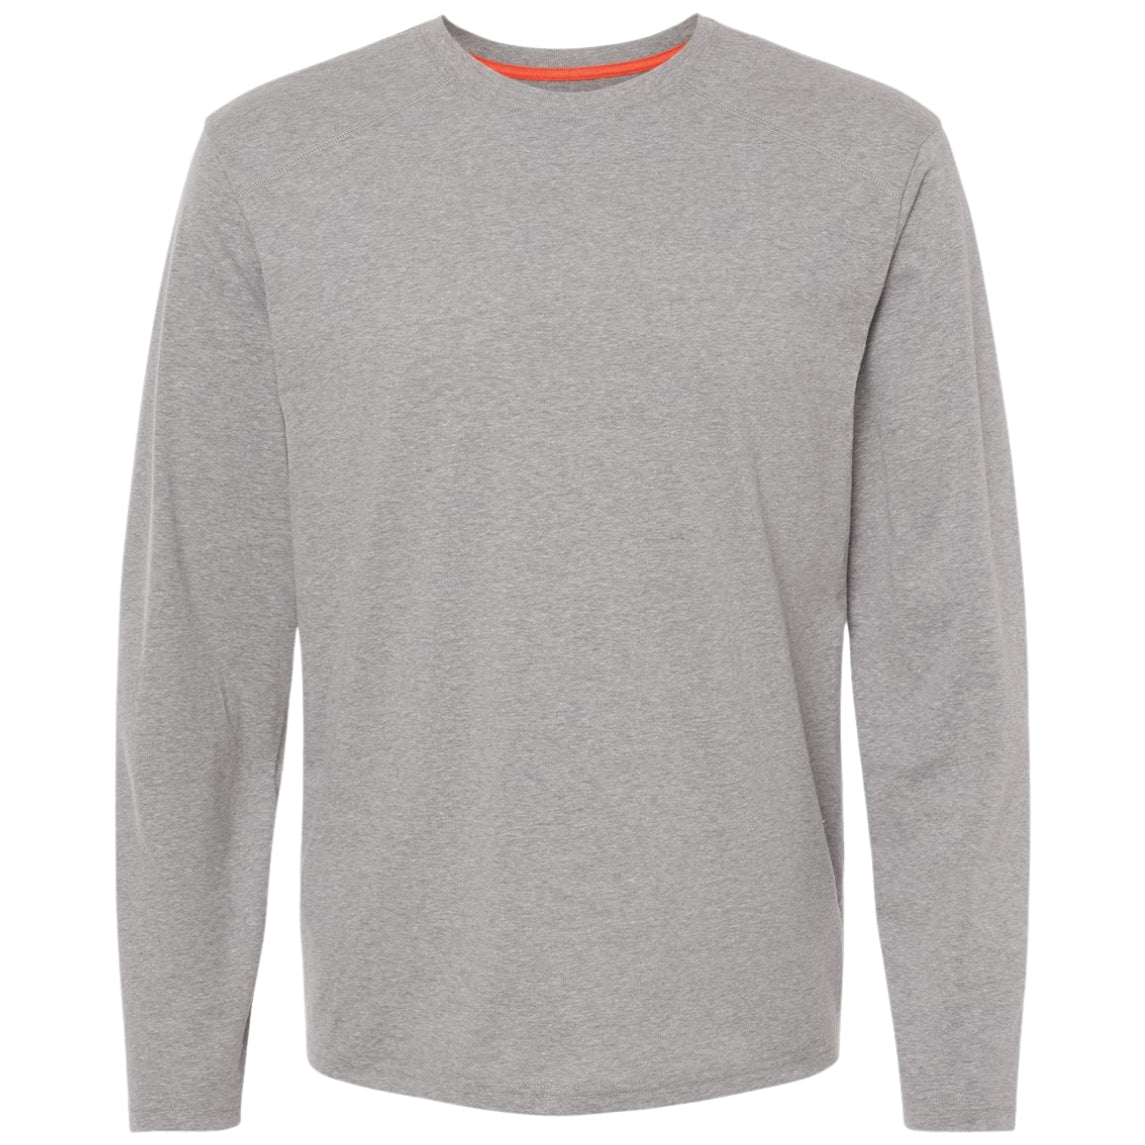 Customizable kastlfel recycledsoft long sleeve shirt in steel gray.